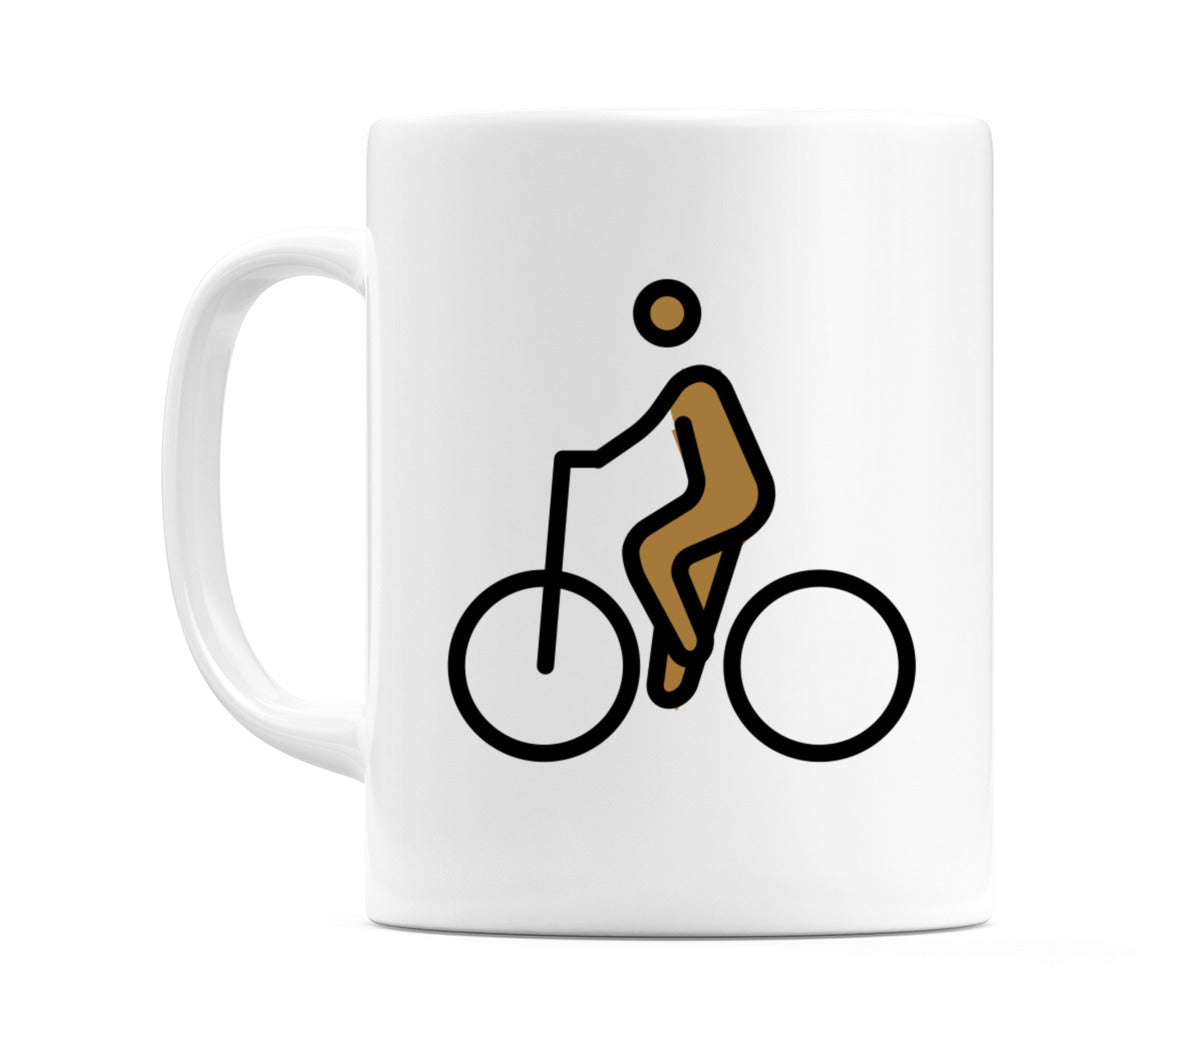 Person Biking: Medium-Dark Skin Tone Emoji Mug